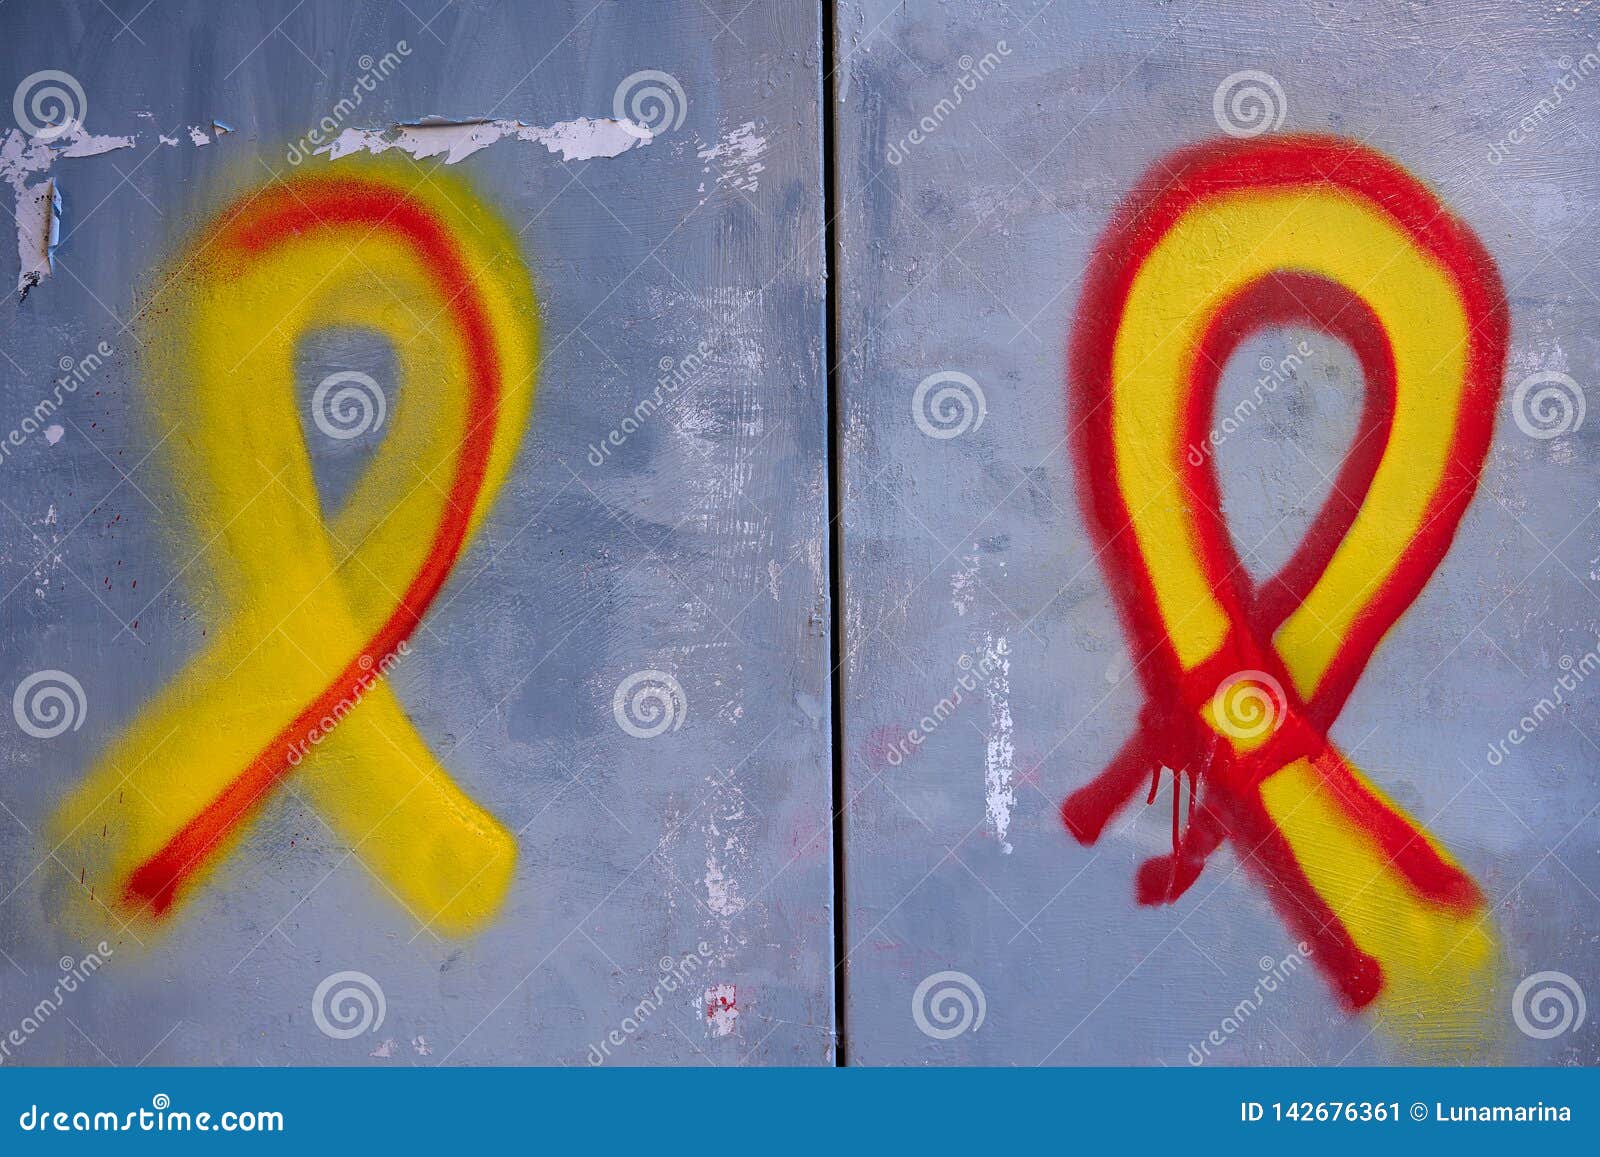 catalonia yellow ribbon tie sign